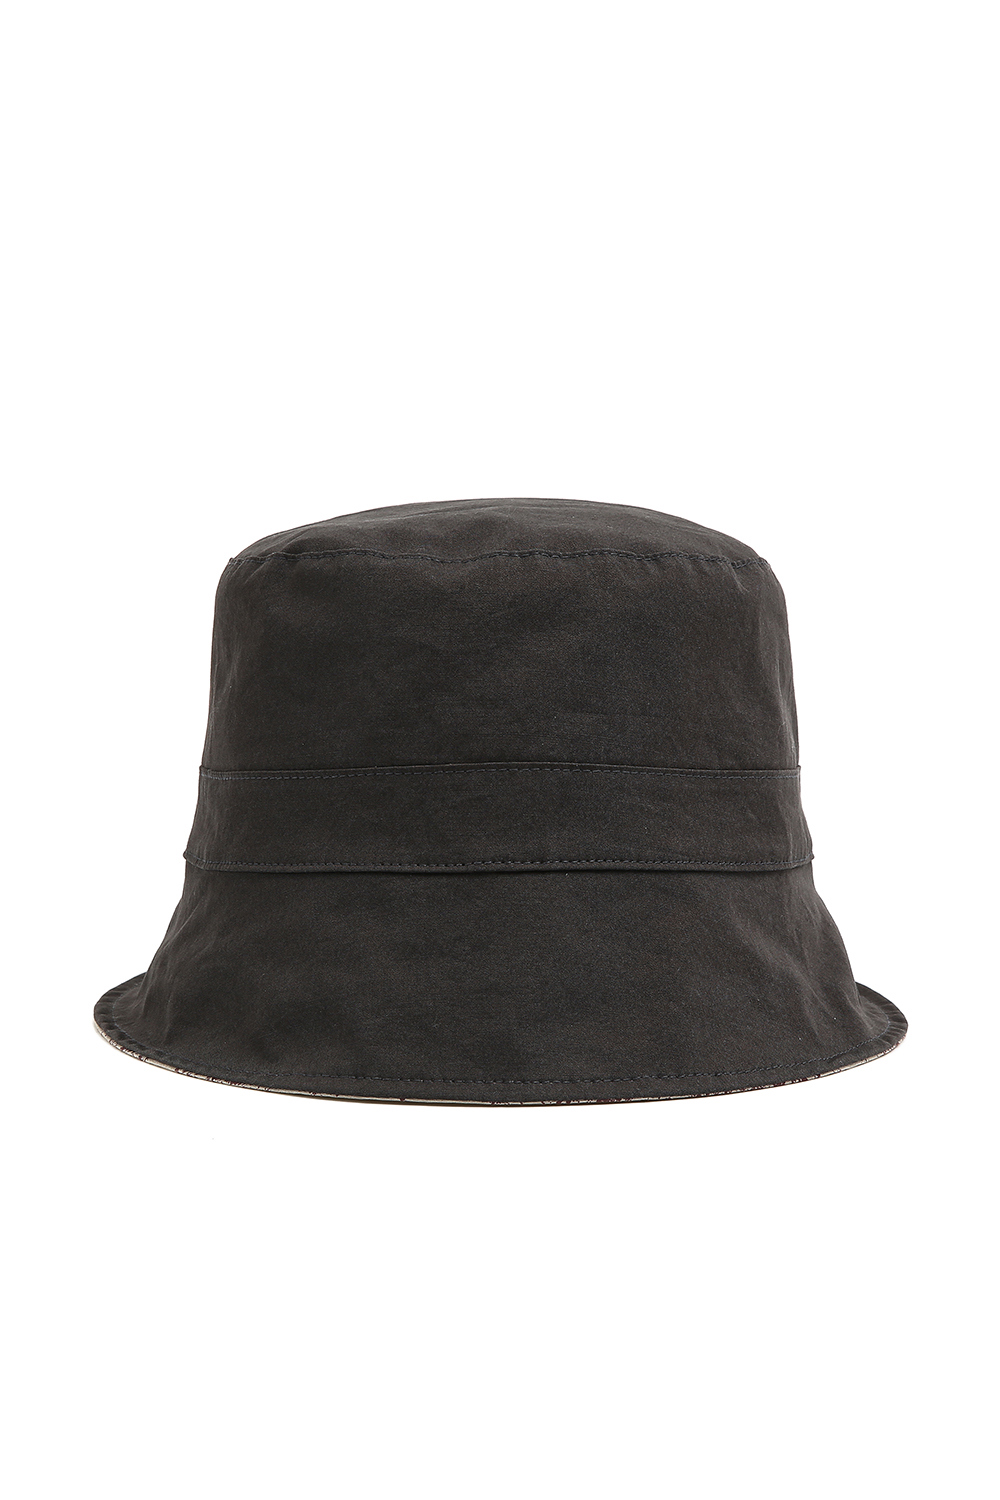 hat brown color image-S2L20